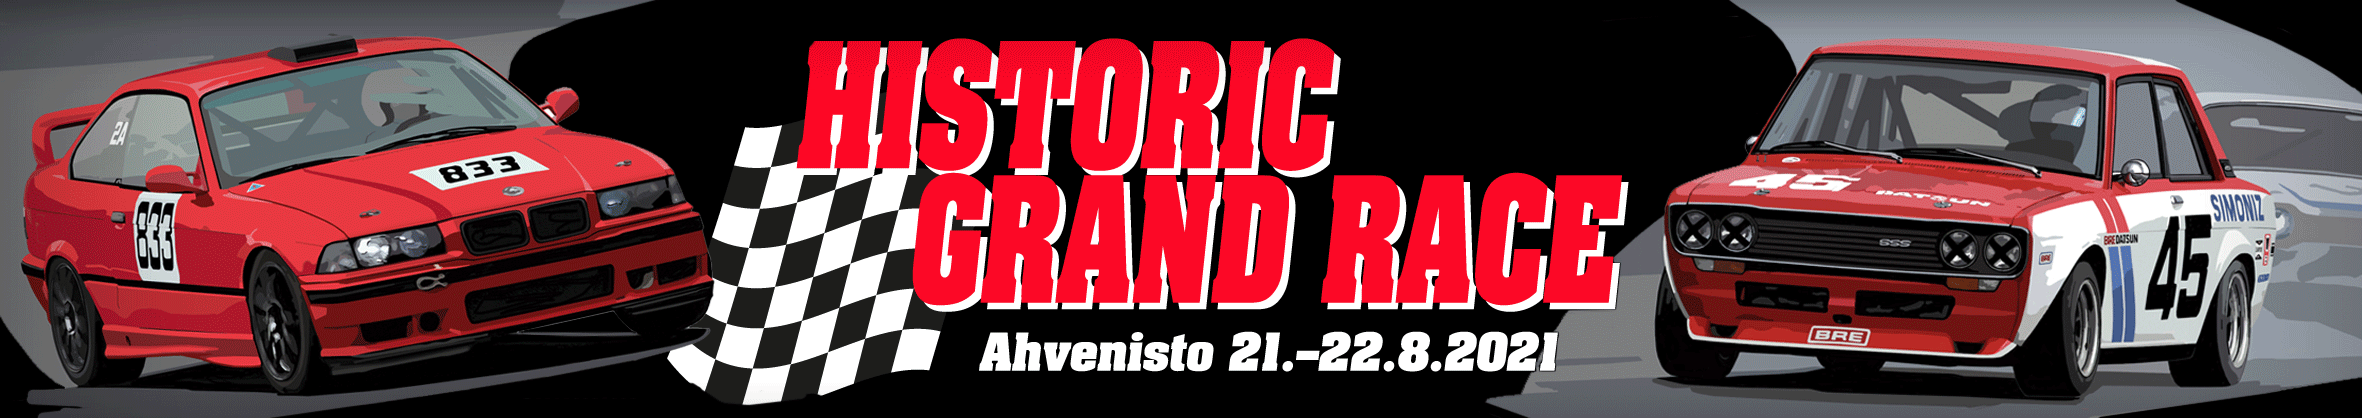 Historic Grand Race 2021